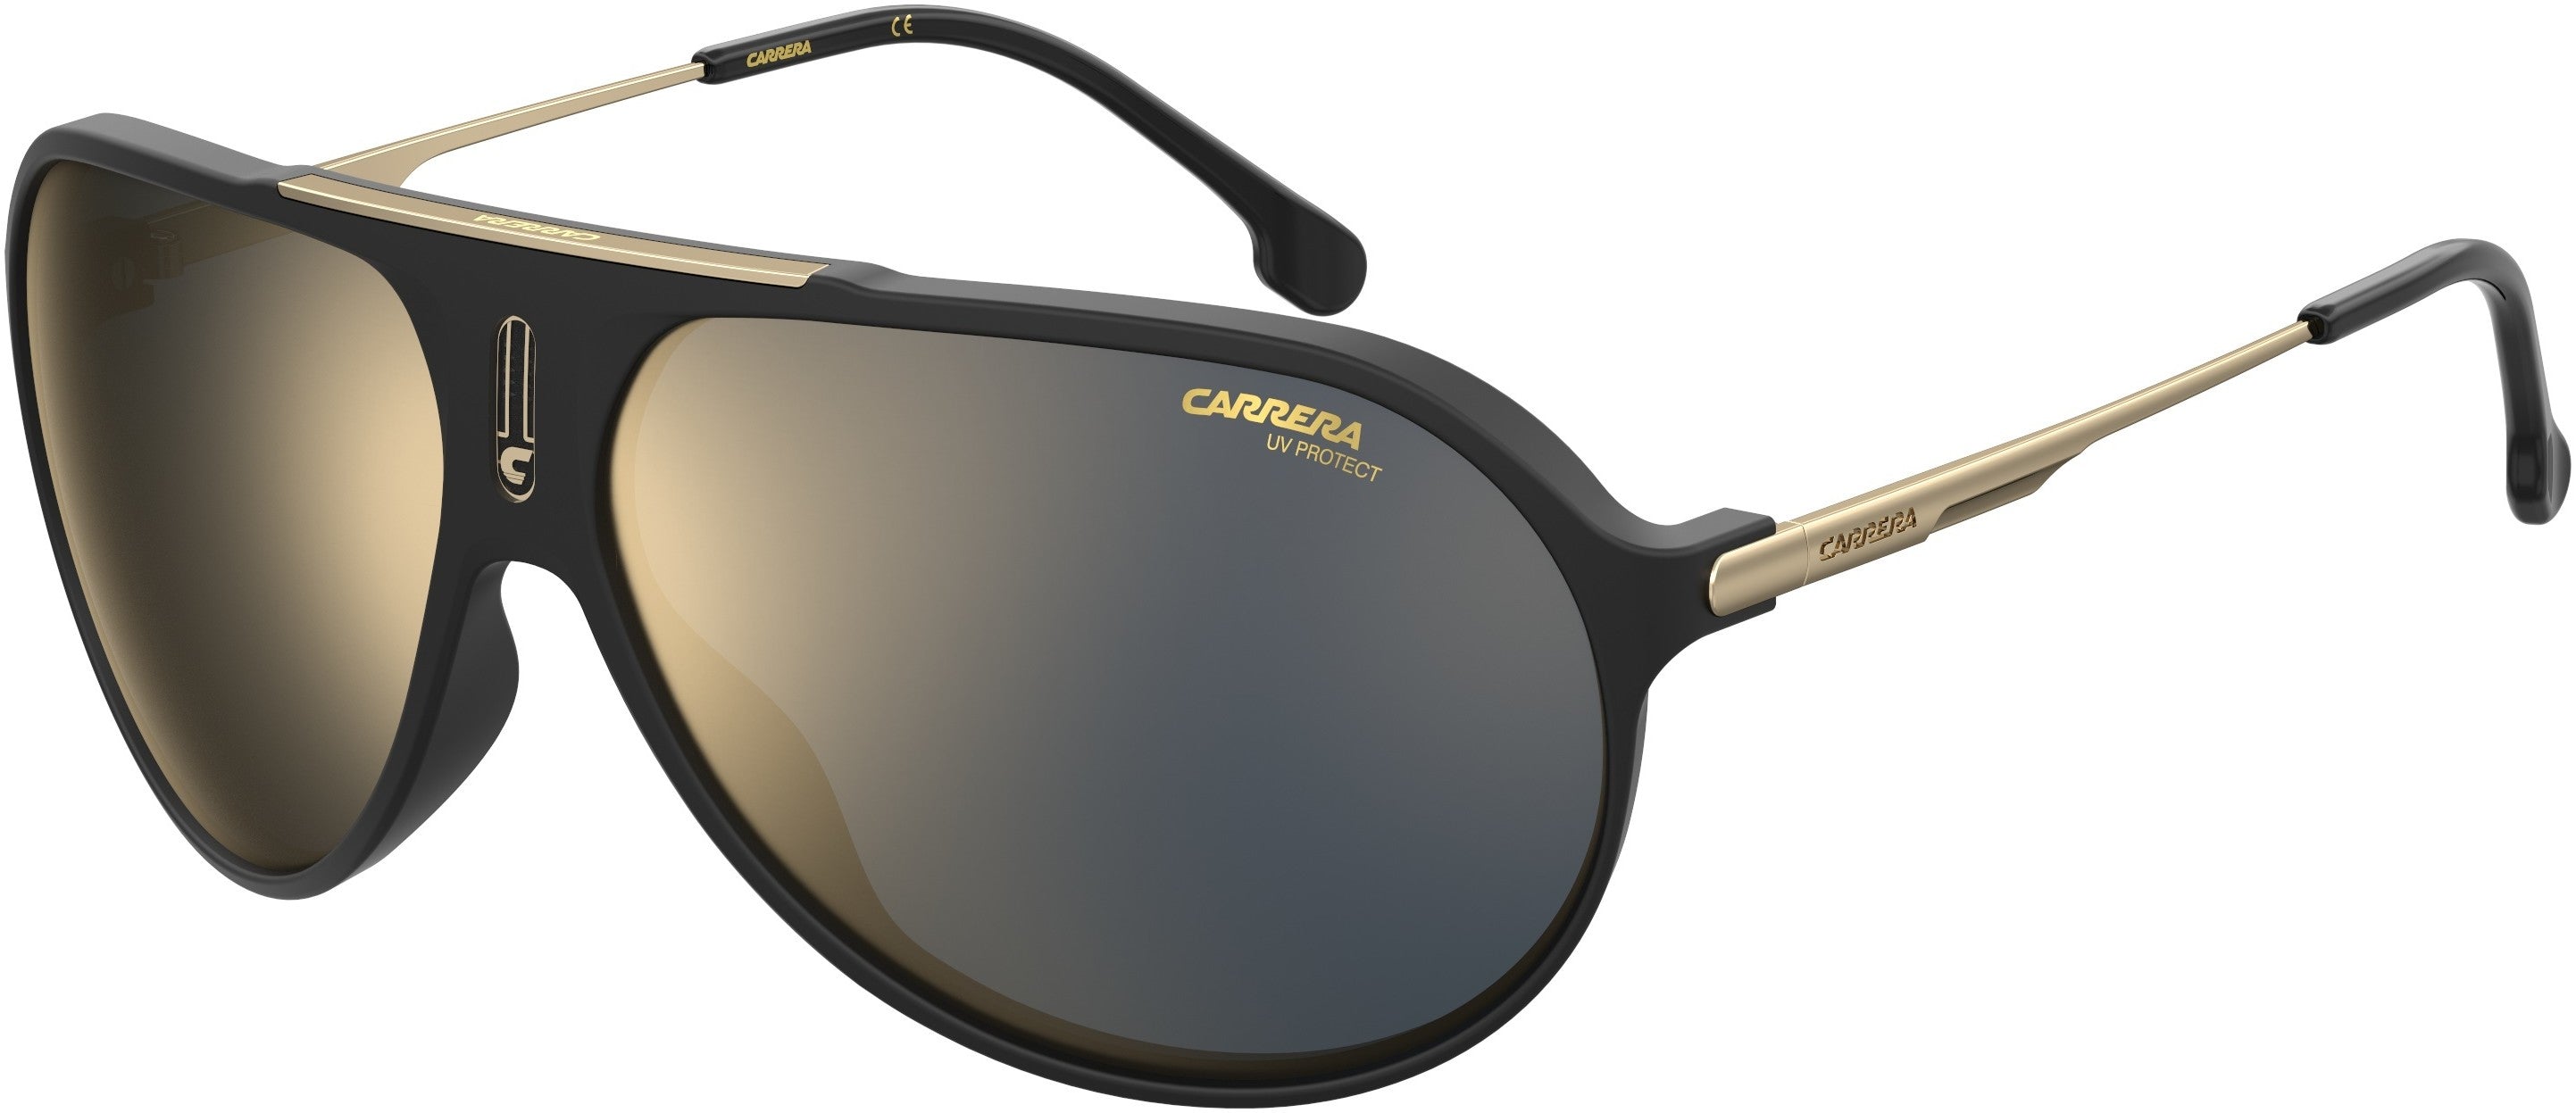 Carrera Hot 65 Aviator Sunglasses 0I46-0I46  Black Gold (JO Gray Gold Mirro)